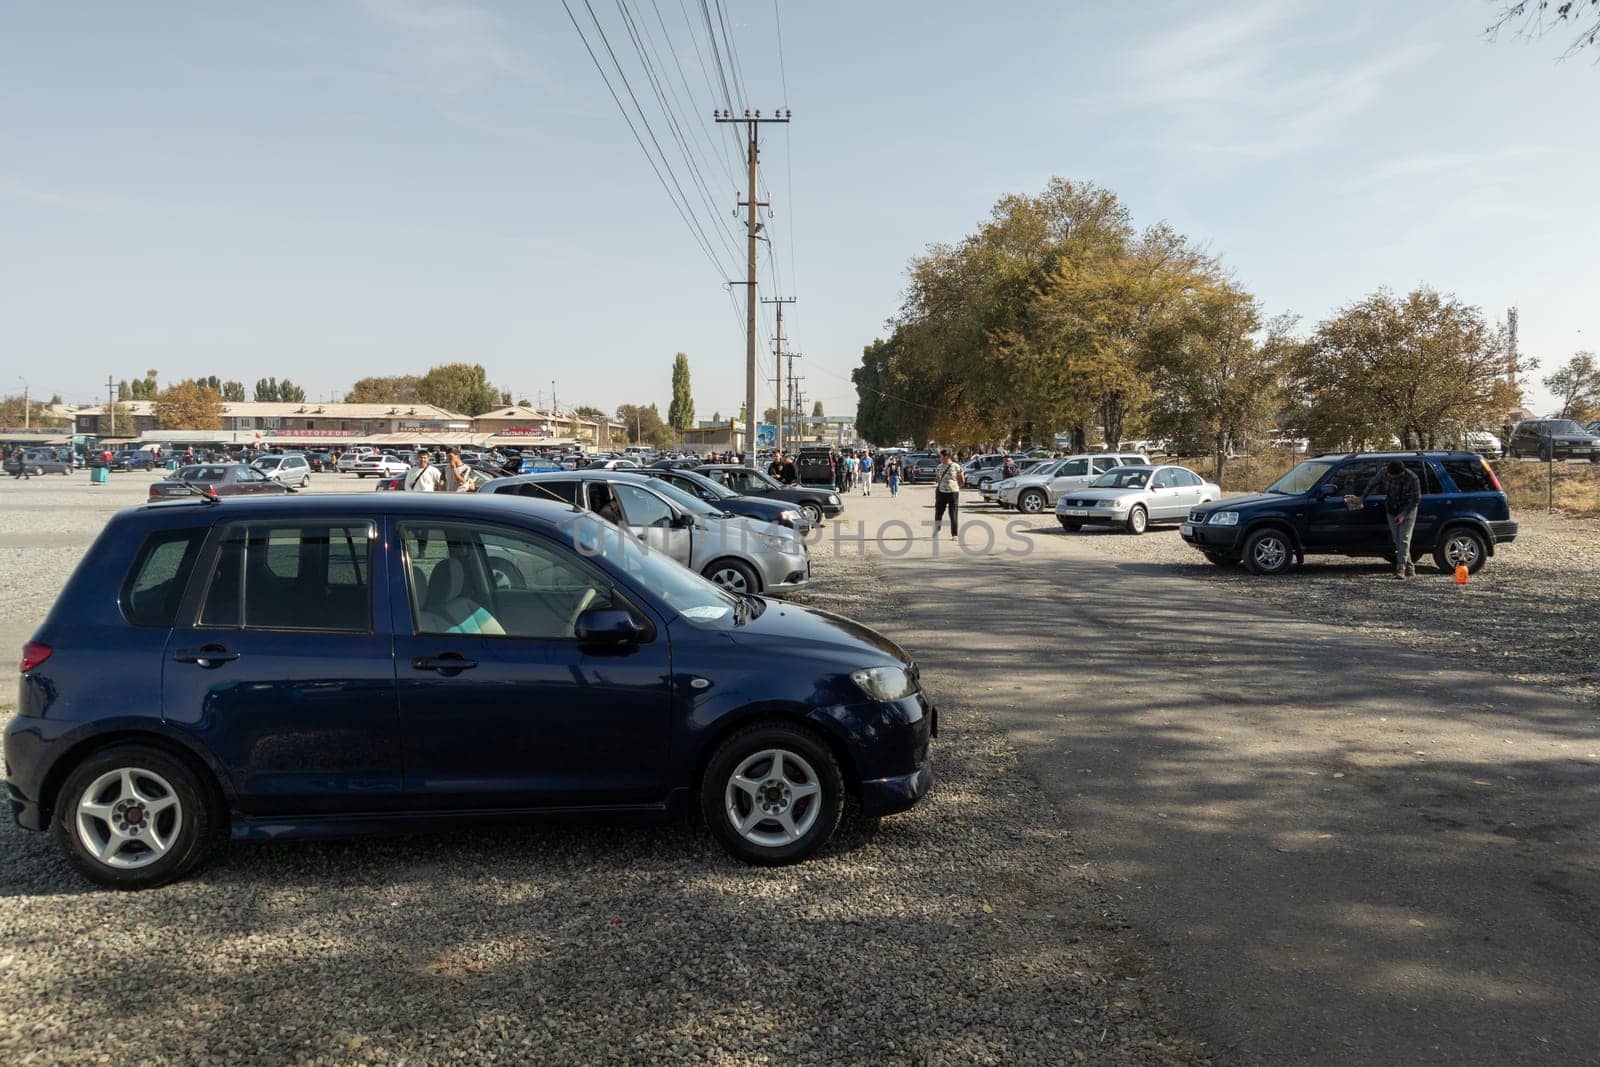 Large used car open air market RIOM Auto in Bishkek, Kyrgyzstan at October 15, 2022